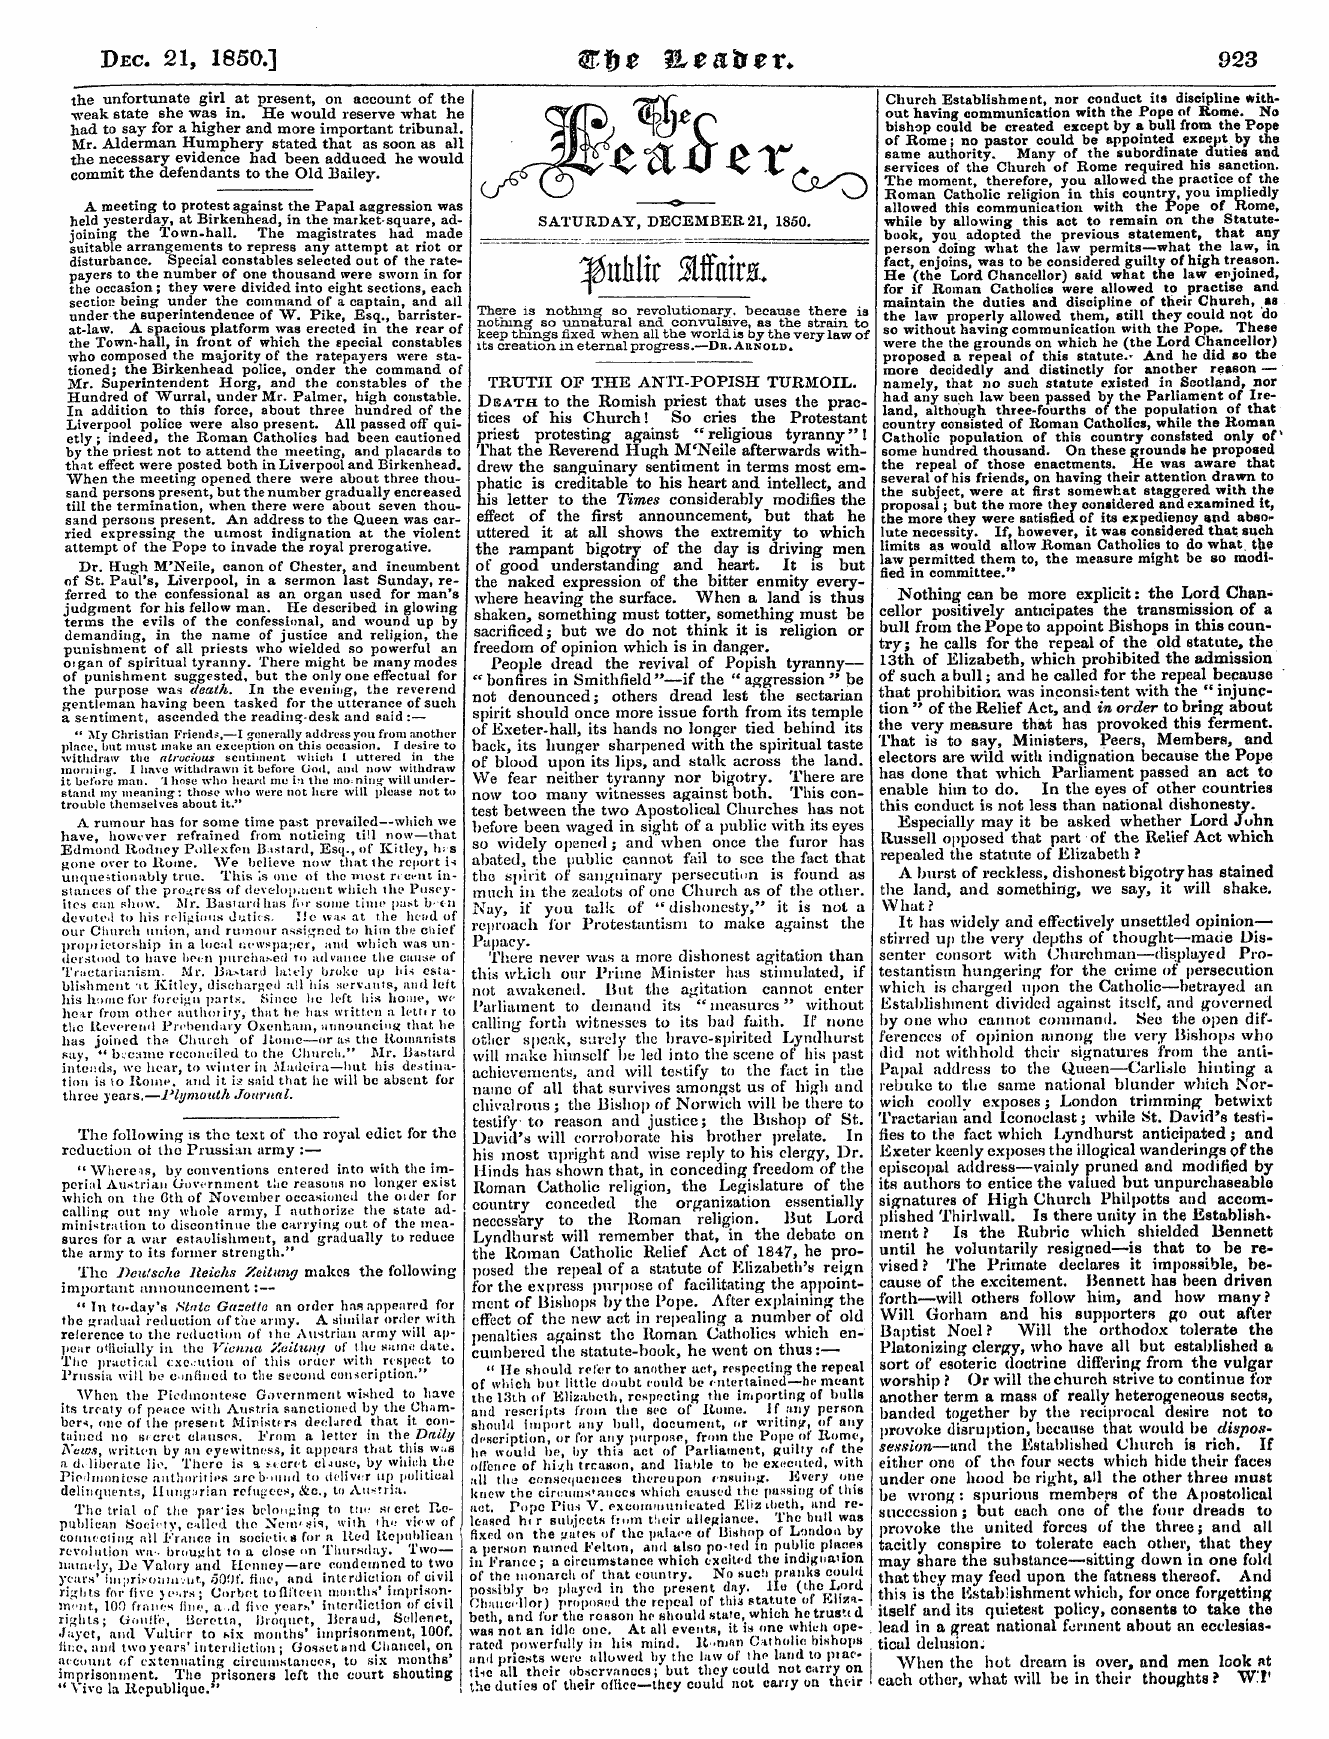 Leader (1850-1860): jS F Y, Country edition - Dec. 21, 1850.] Wt-Fyt Ilt&Tlt V* 923